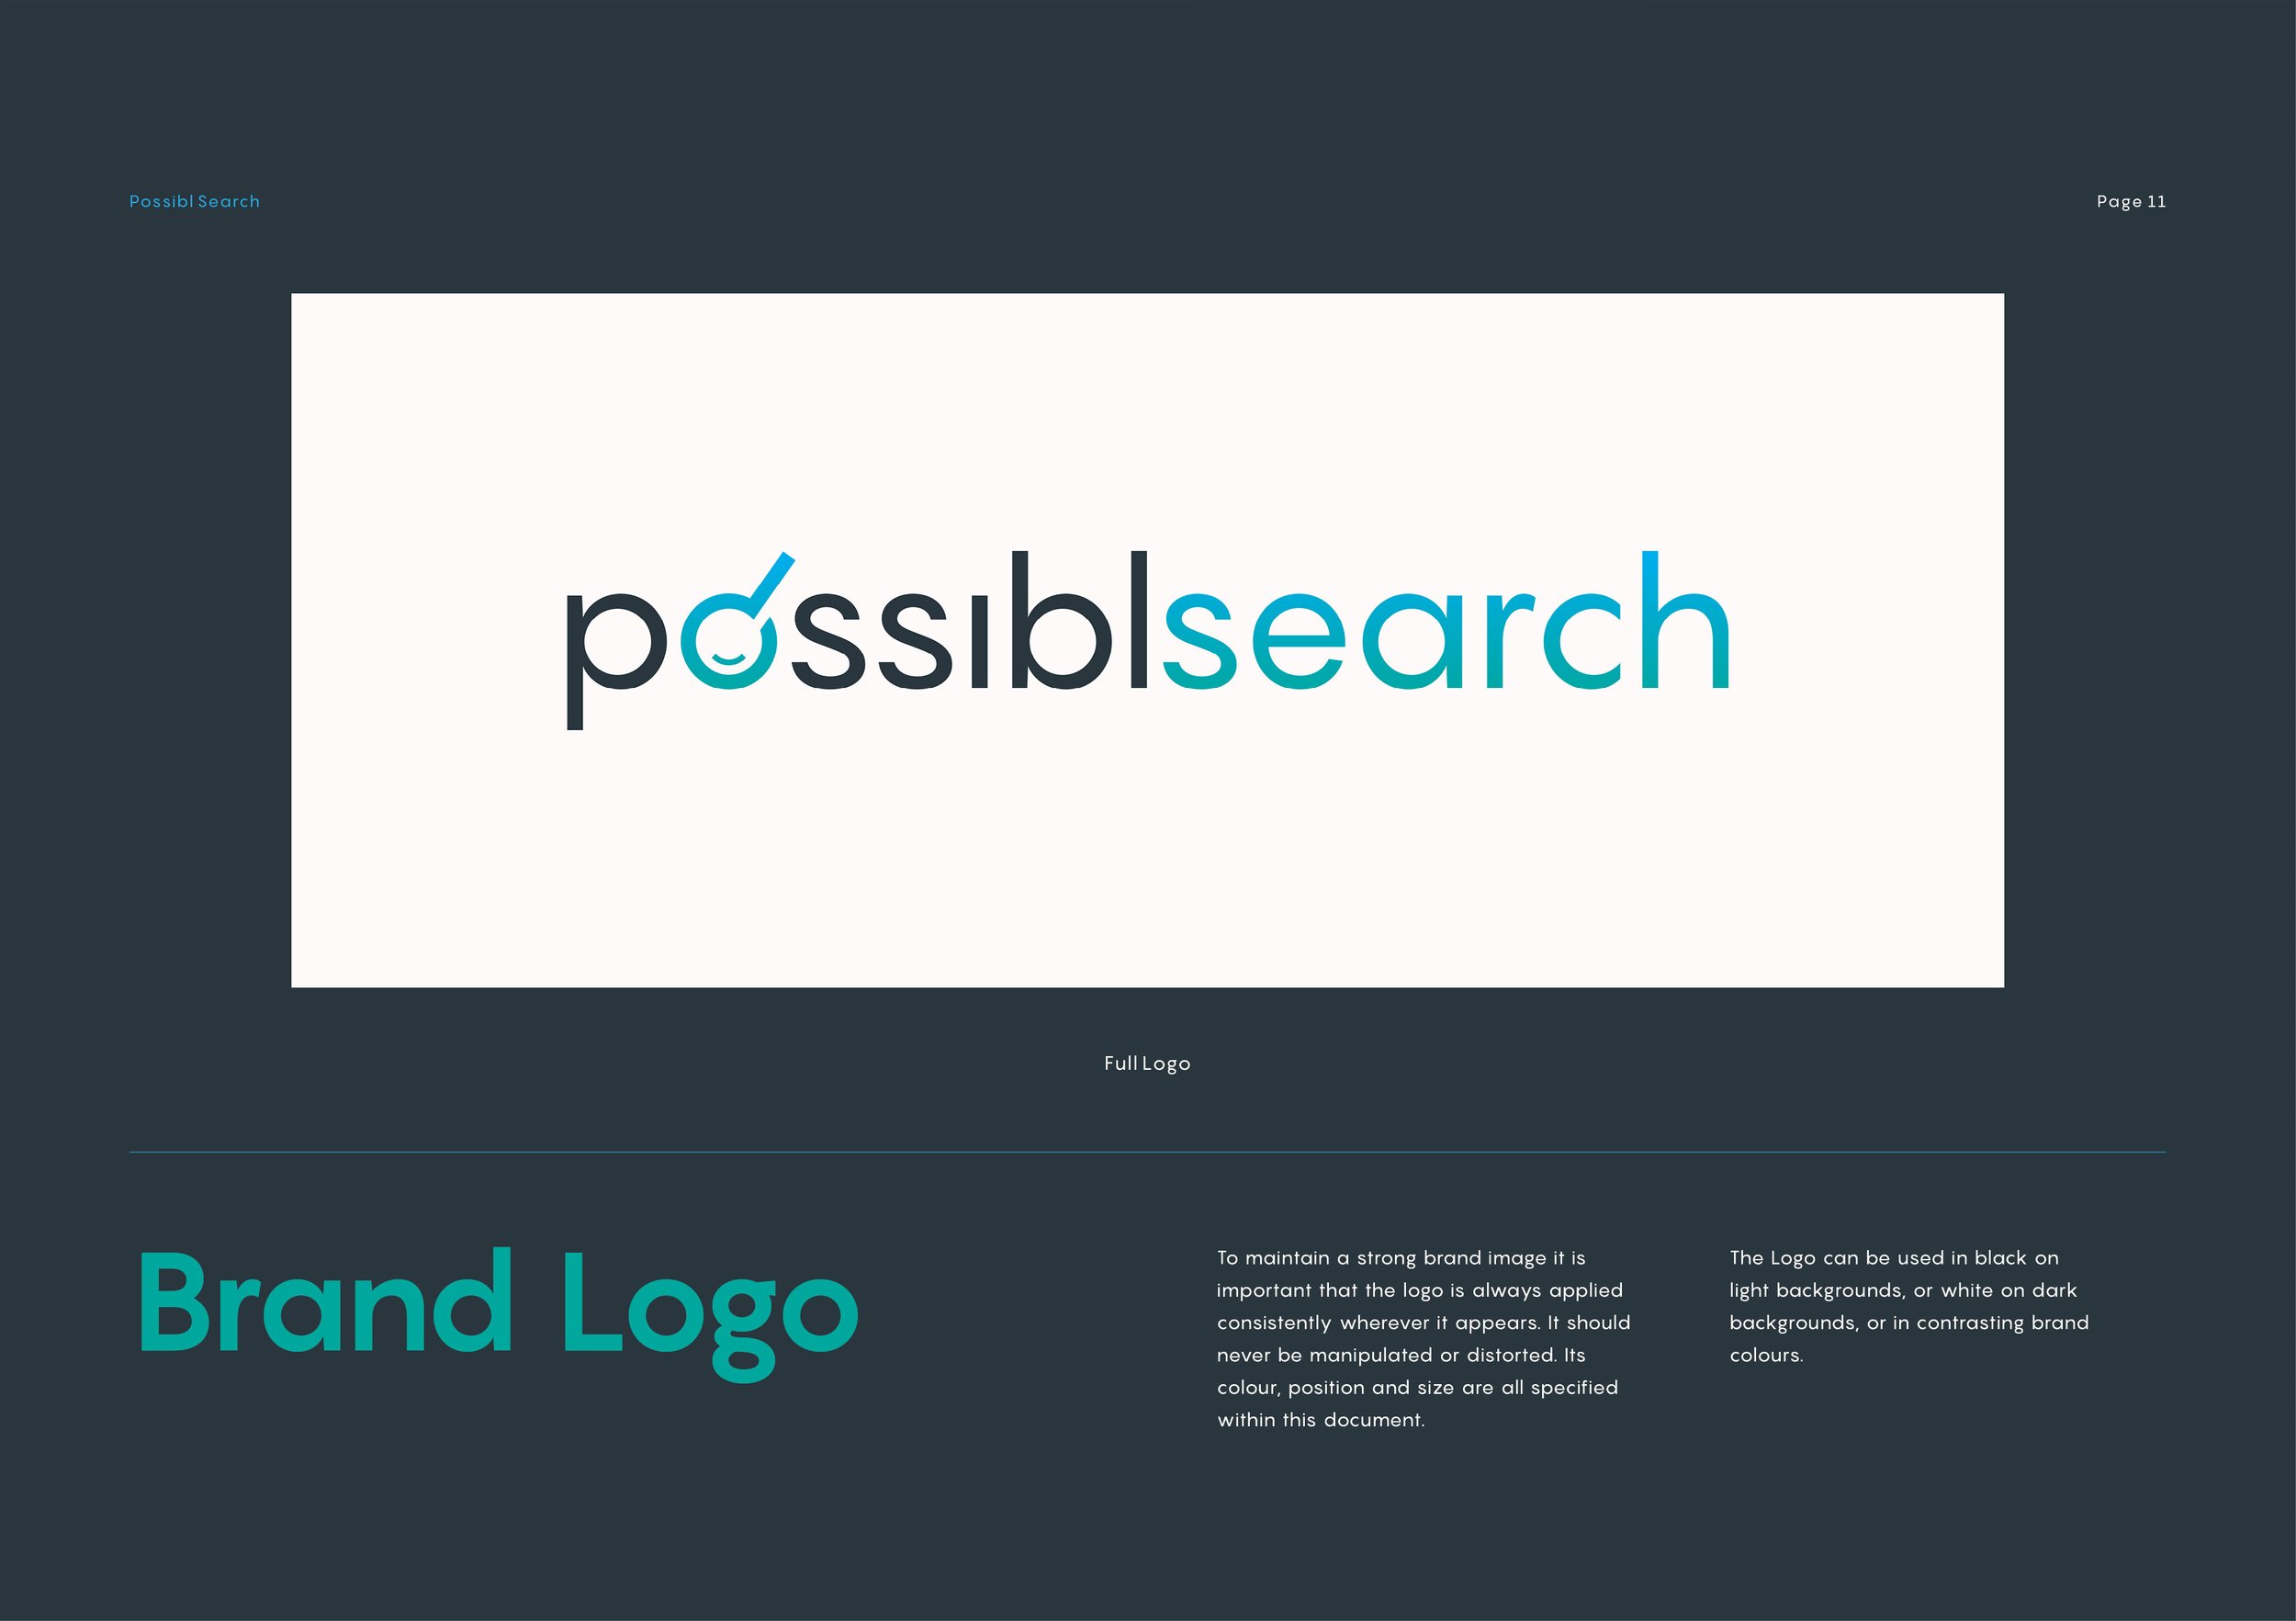 Possibl Search - Brand Logo Presentation11.jpg